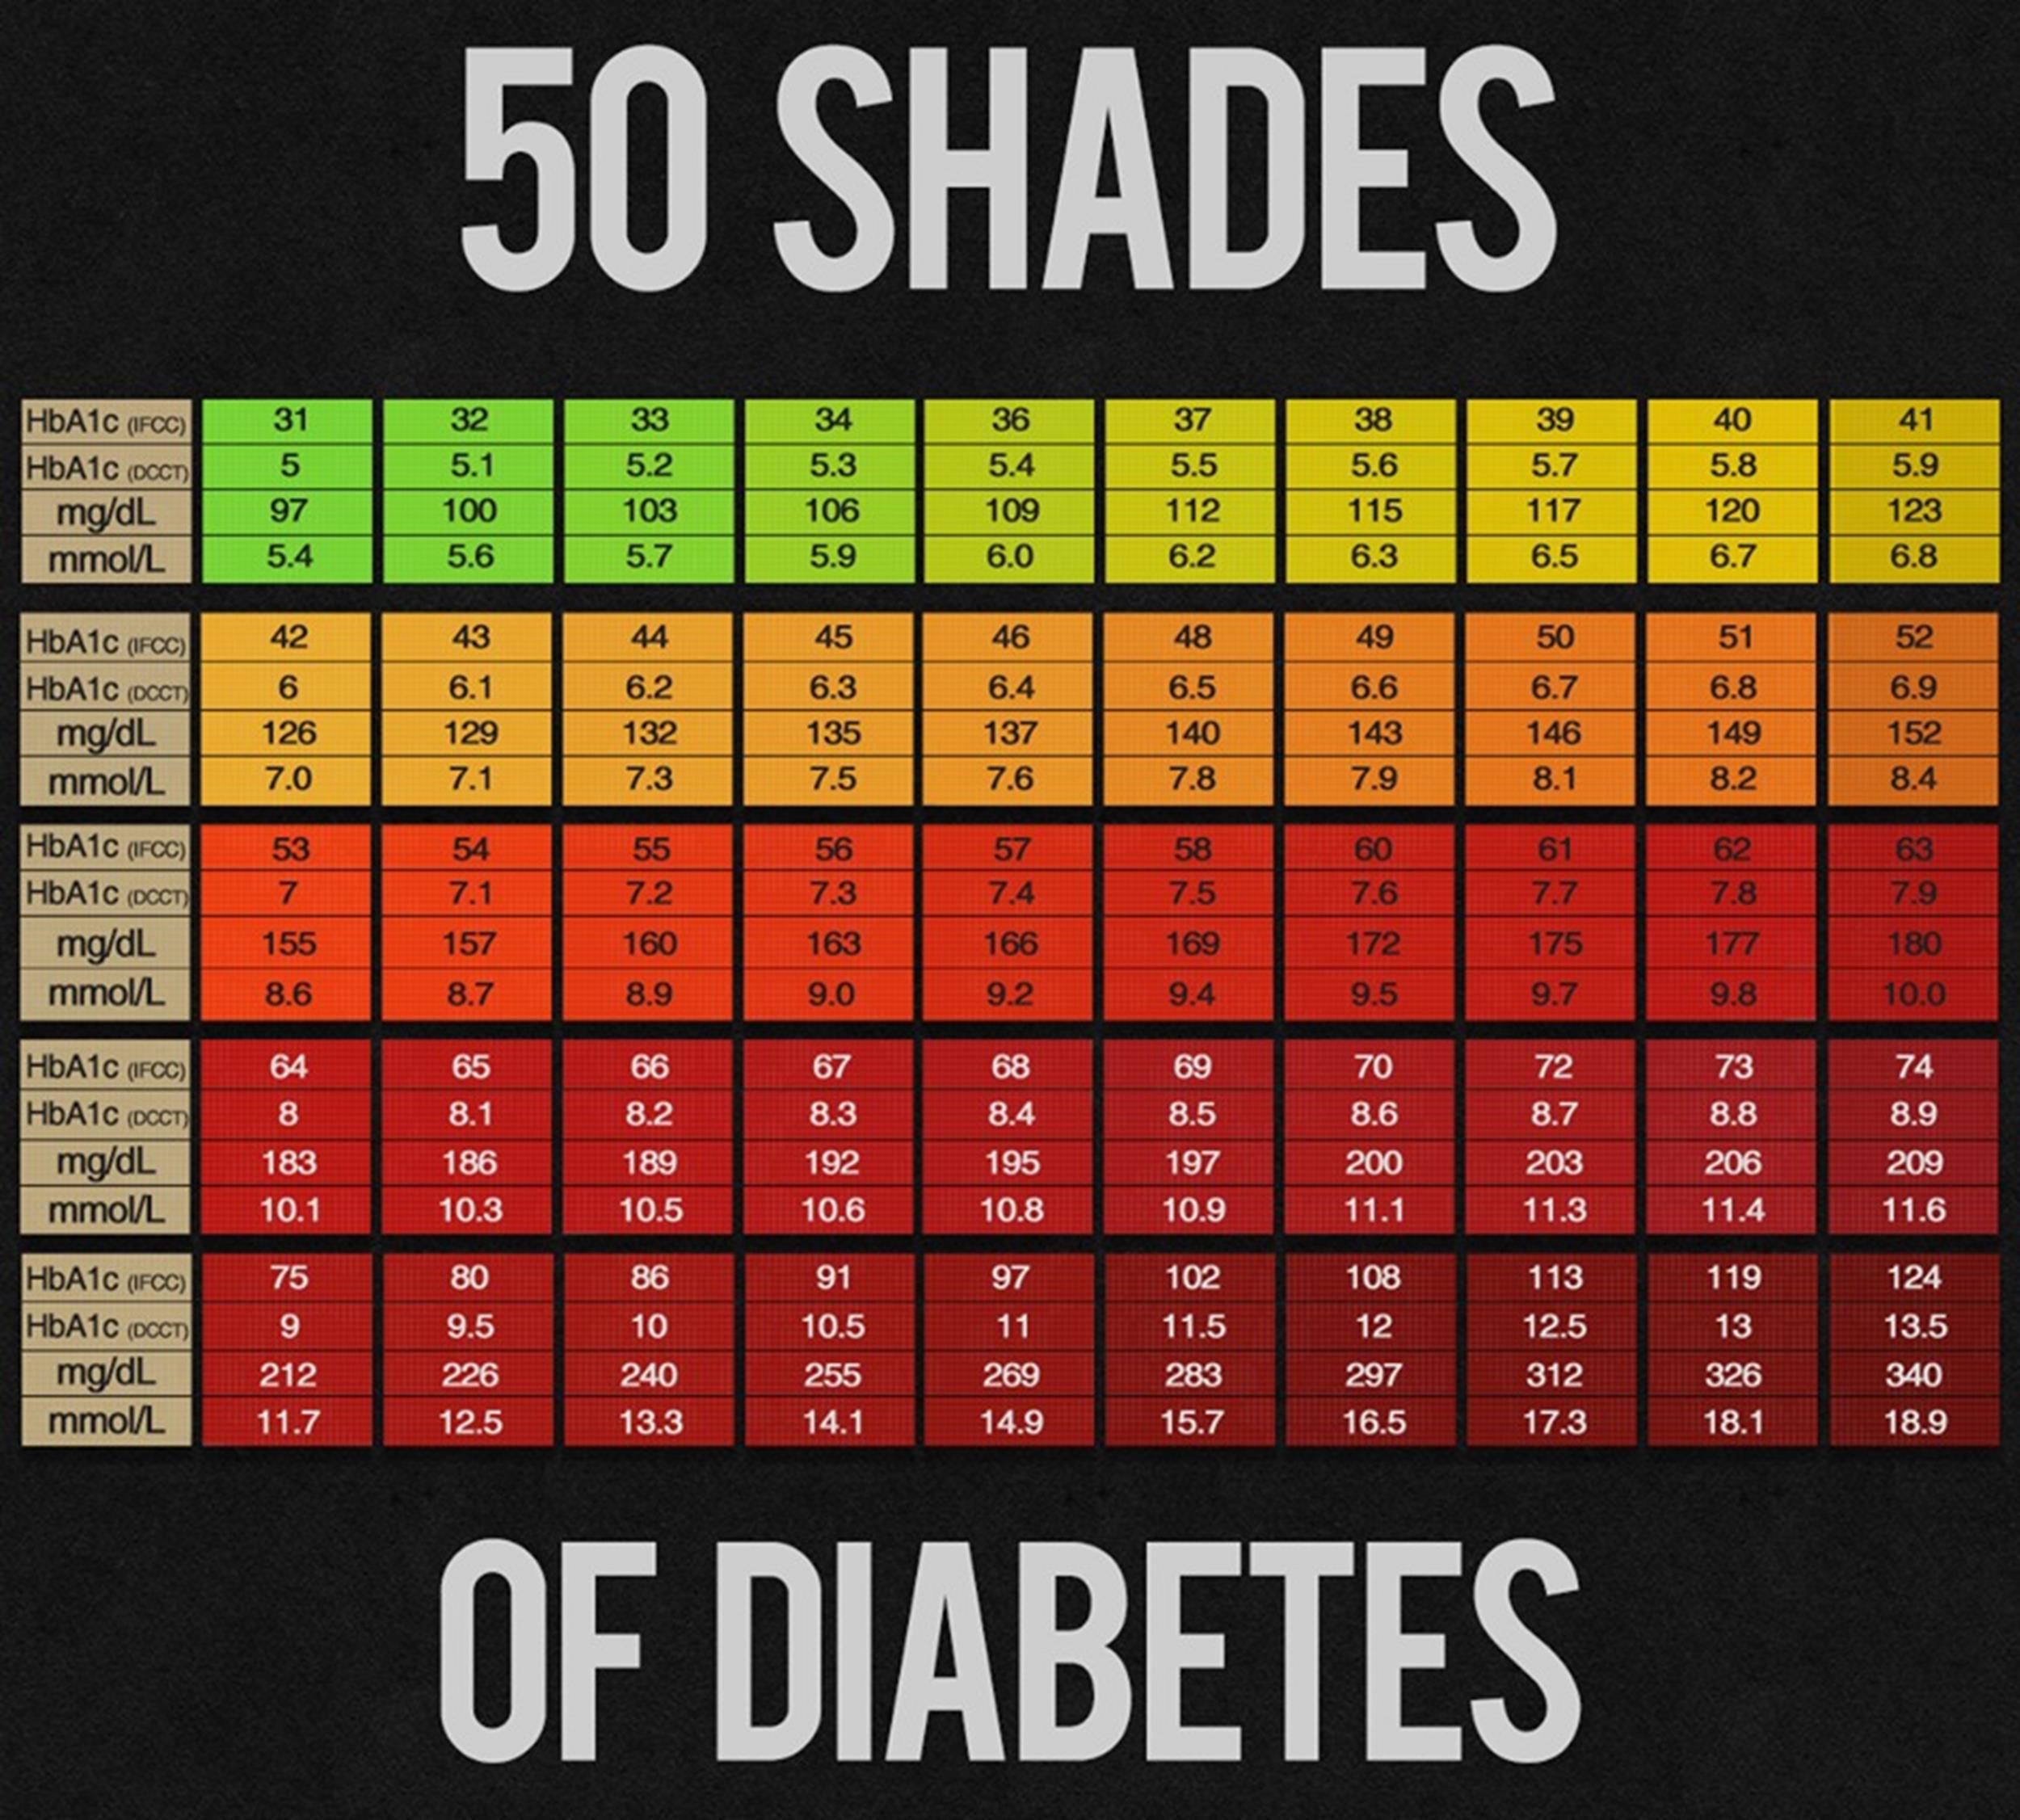 25 Printable Blood Sugar Charts [Normal, High, Low] ᐅ ...